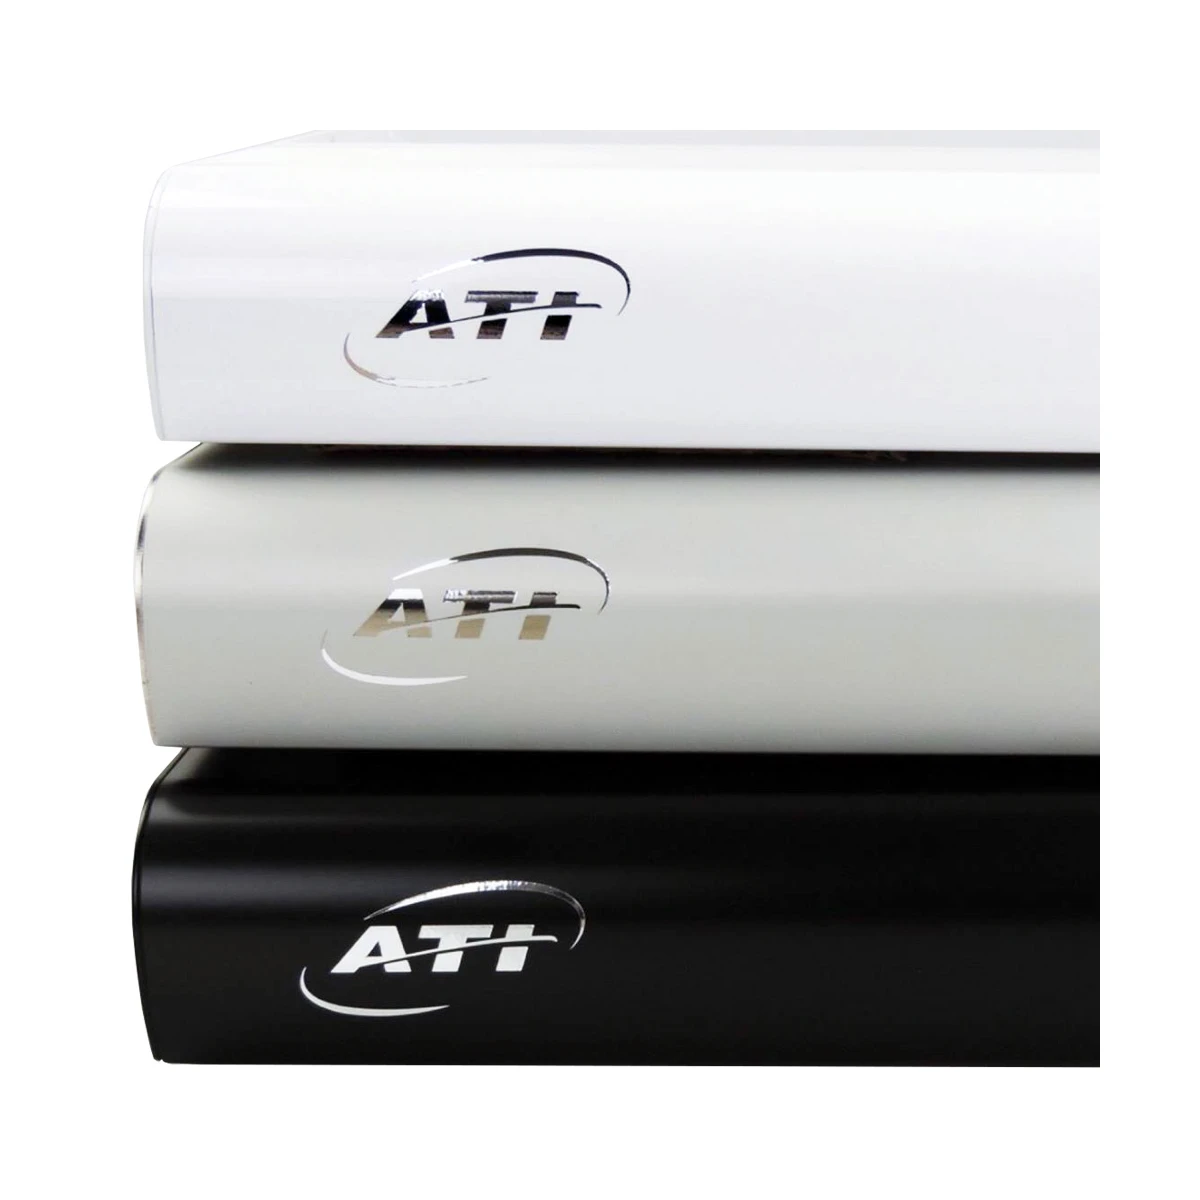 ATI Hybrid LED-Powermodul 4x39 Watt T5 + 2x75 Watt LED WiFi (1010001) schwarz